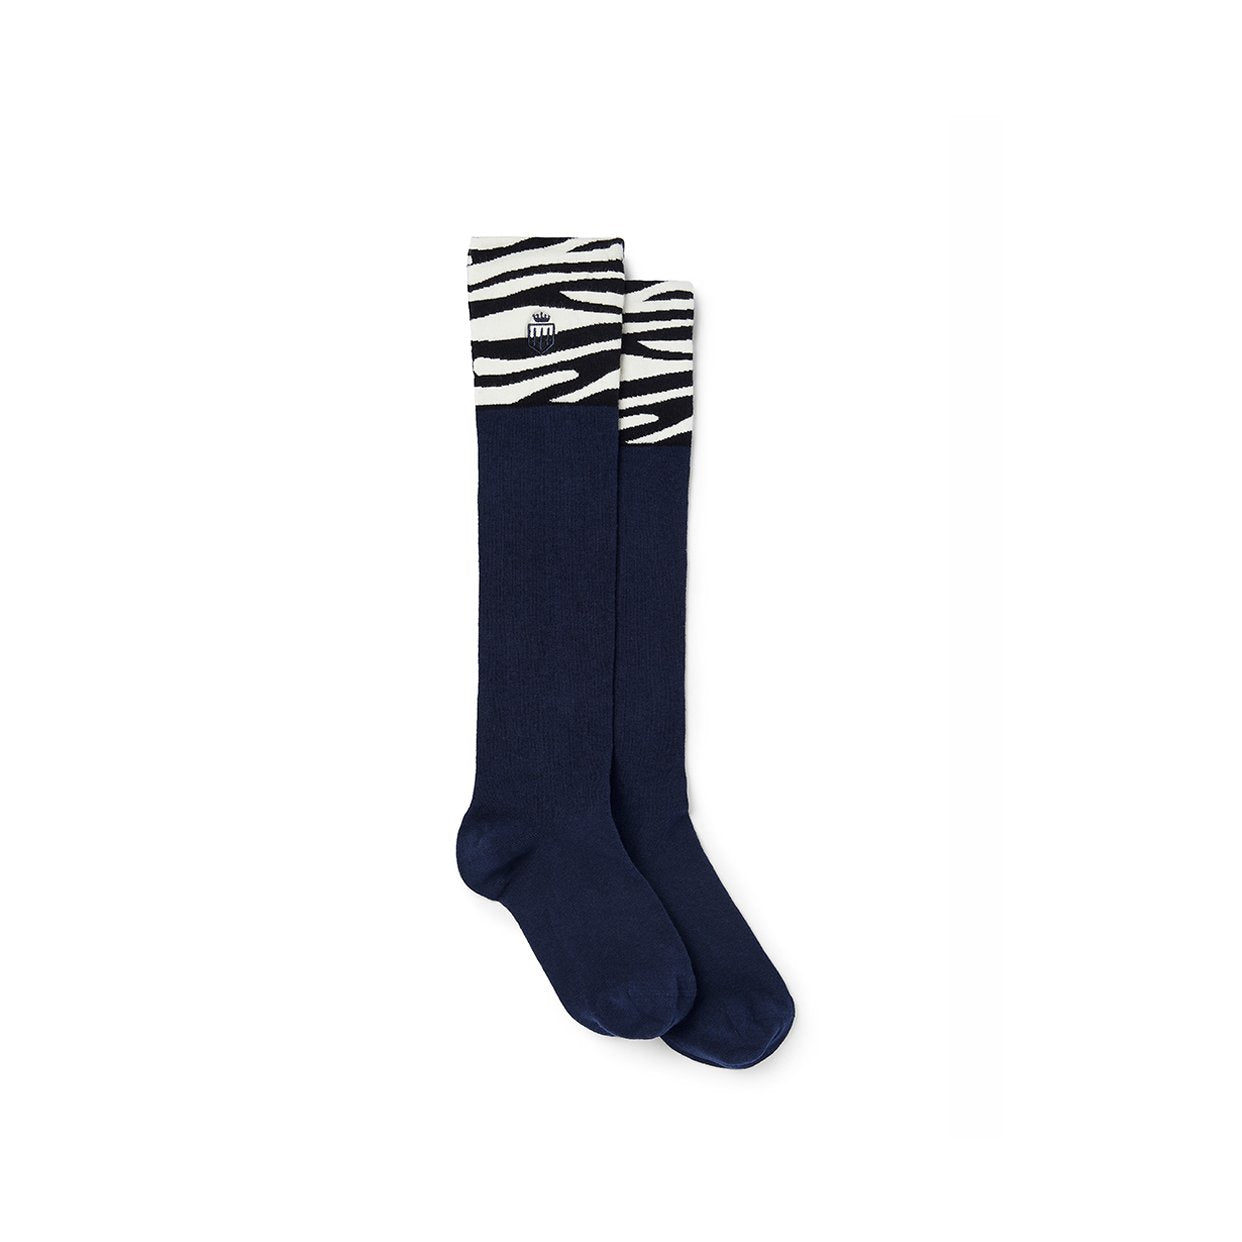 Signature Knee High Socks Navy & Zebra